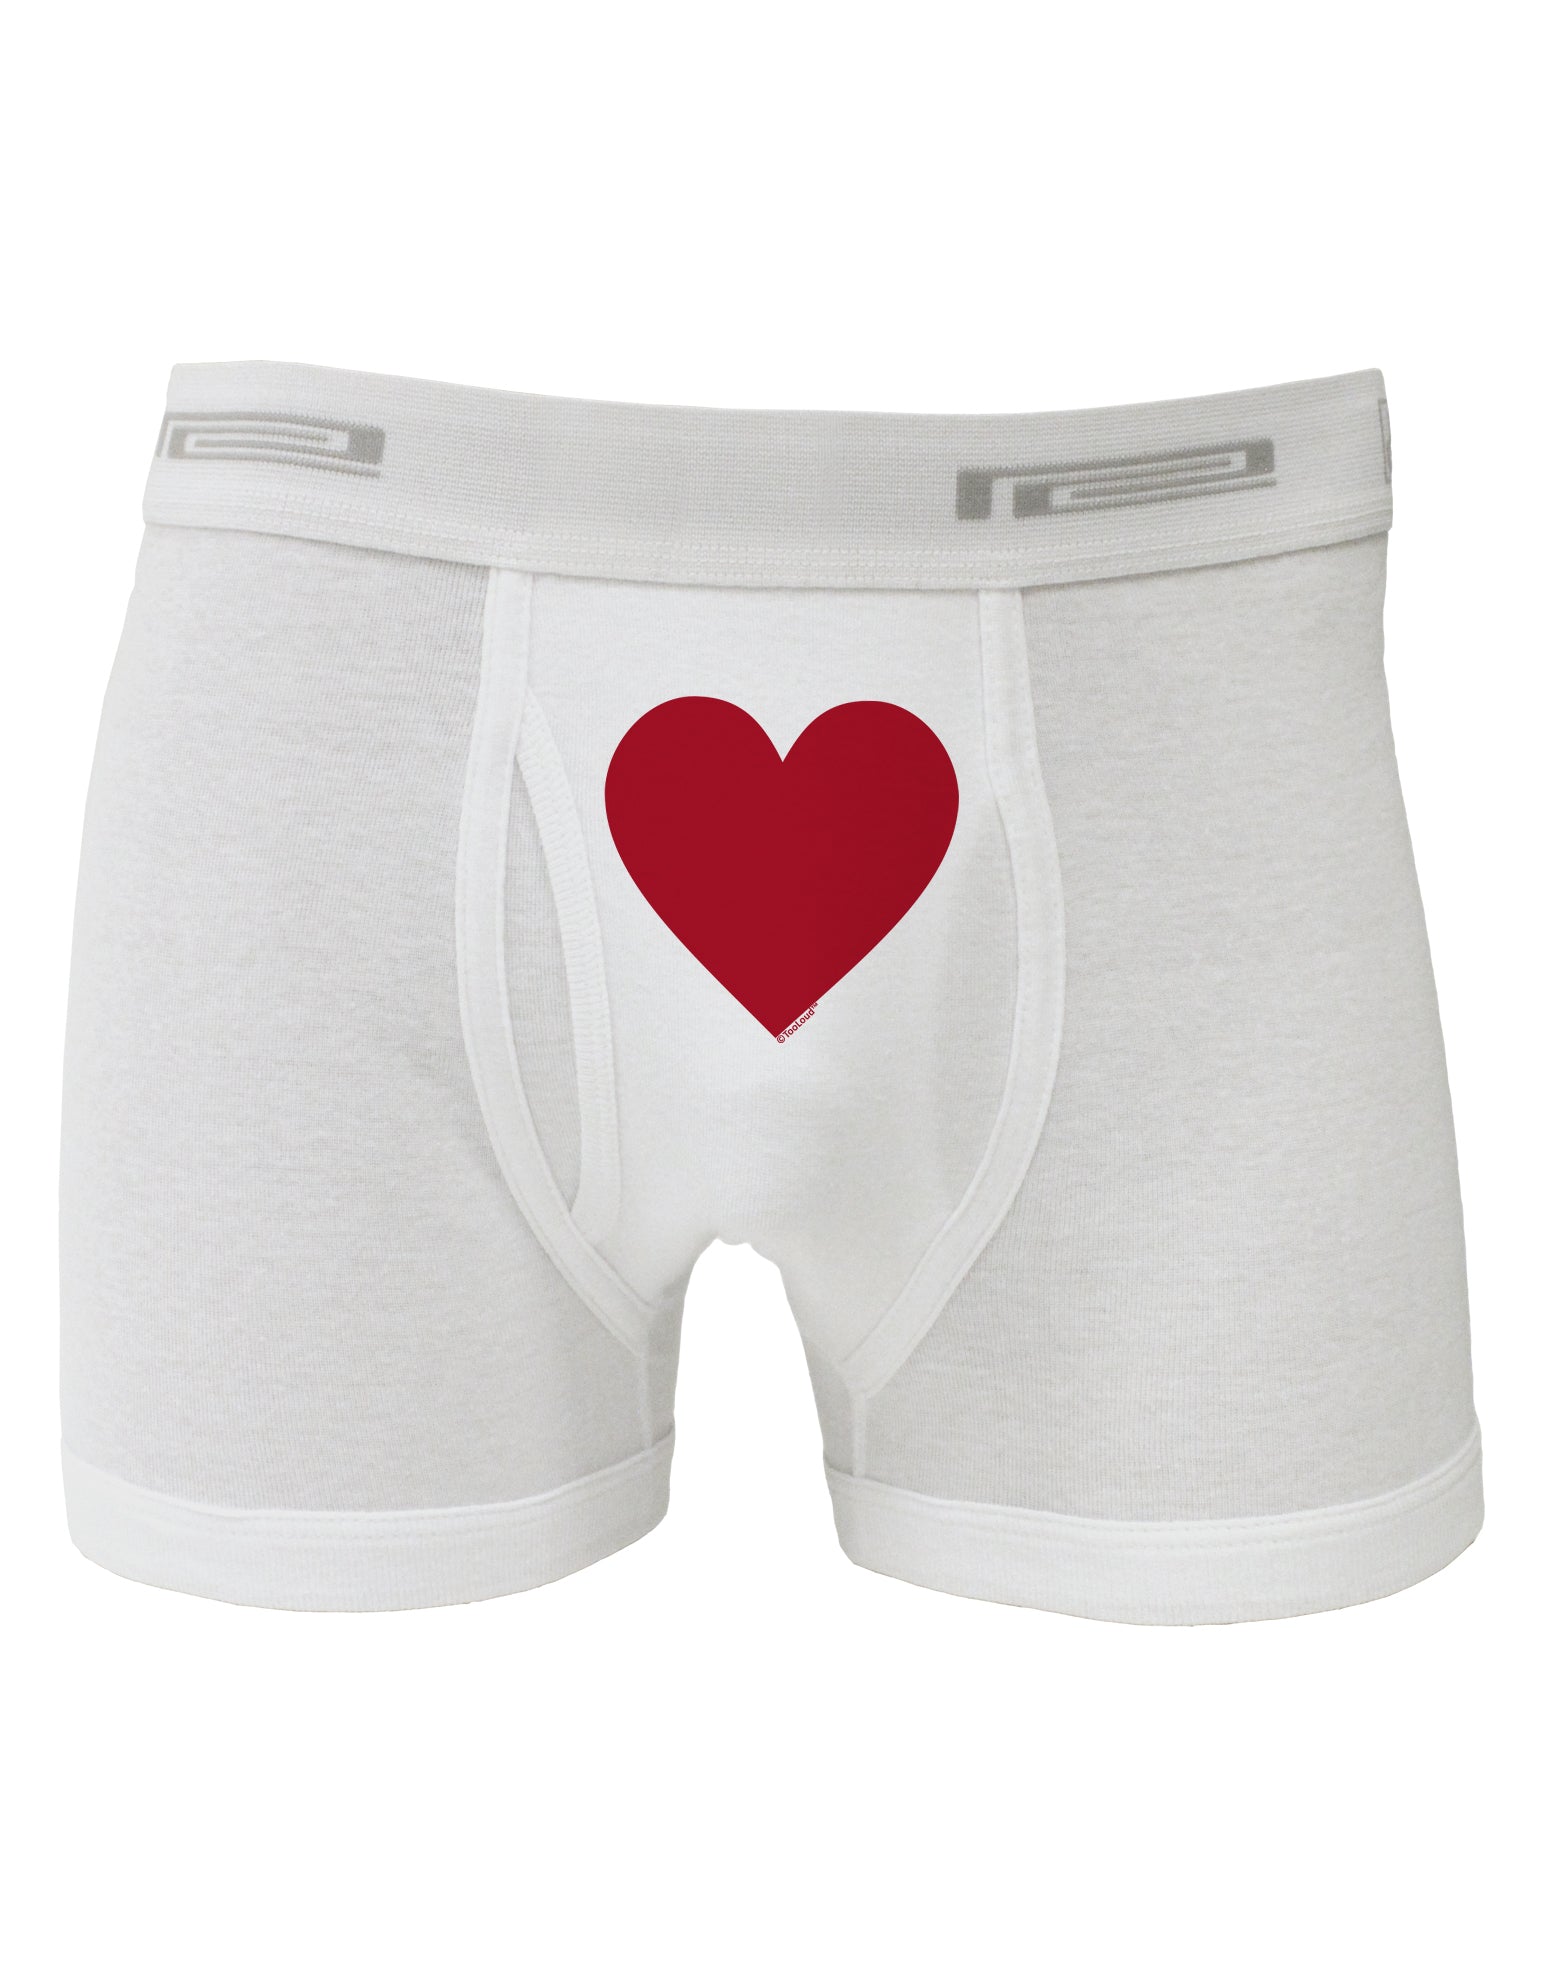 Mens Cupids Arrow Hearts All Over Boxer Briefs Valentines Day Underwear